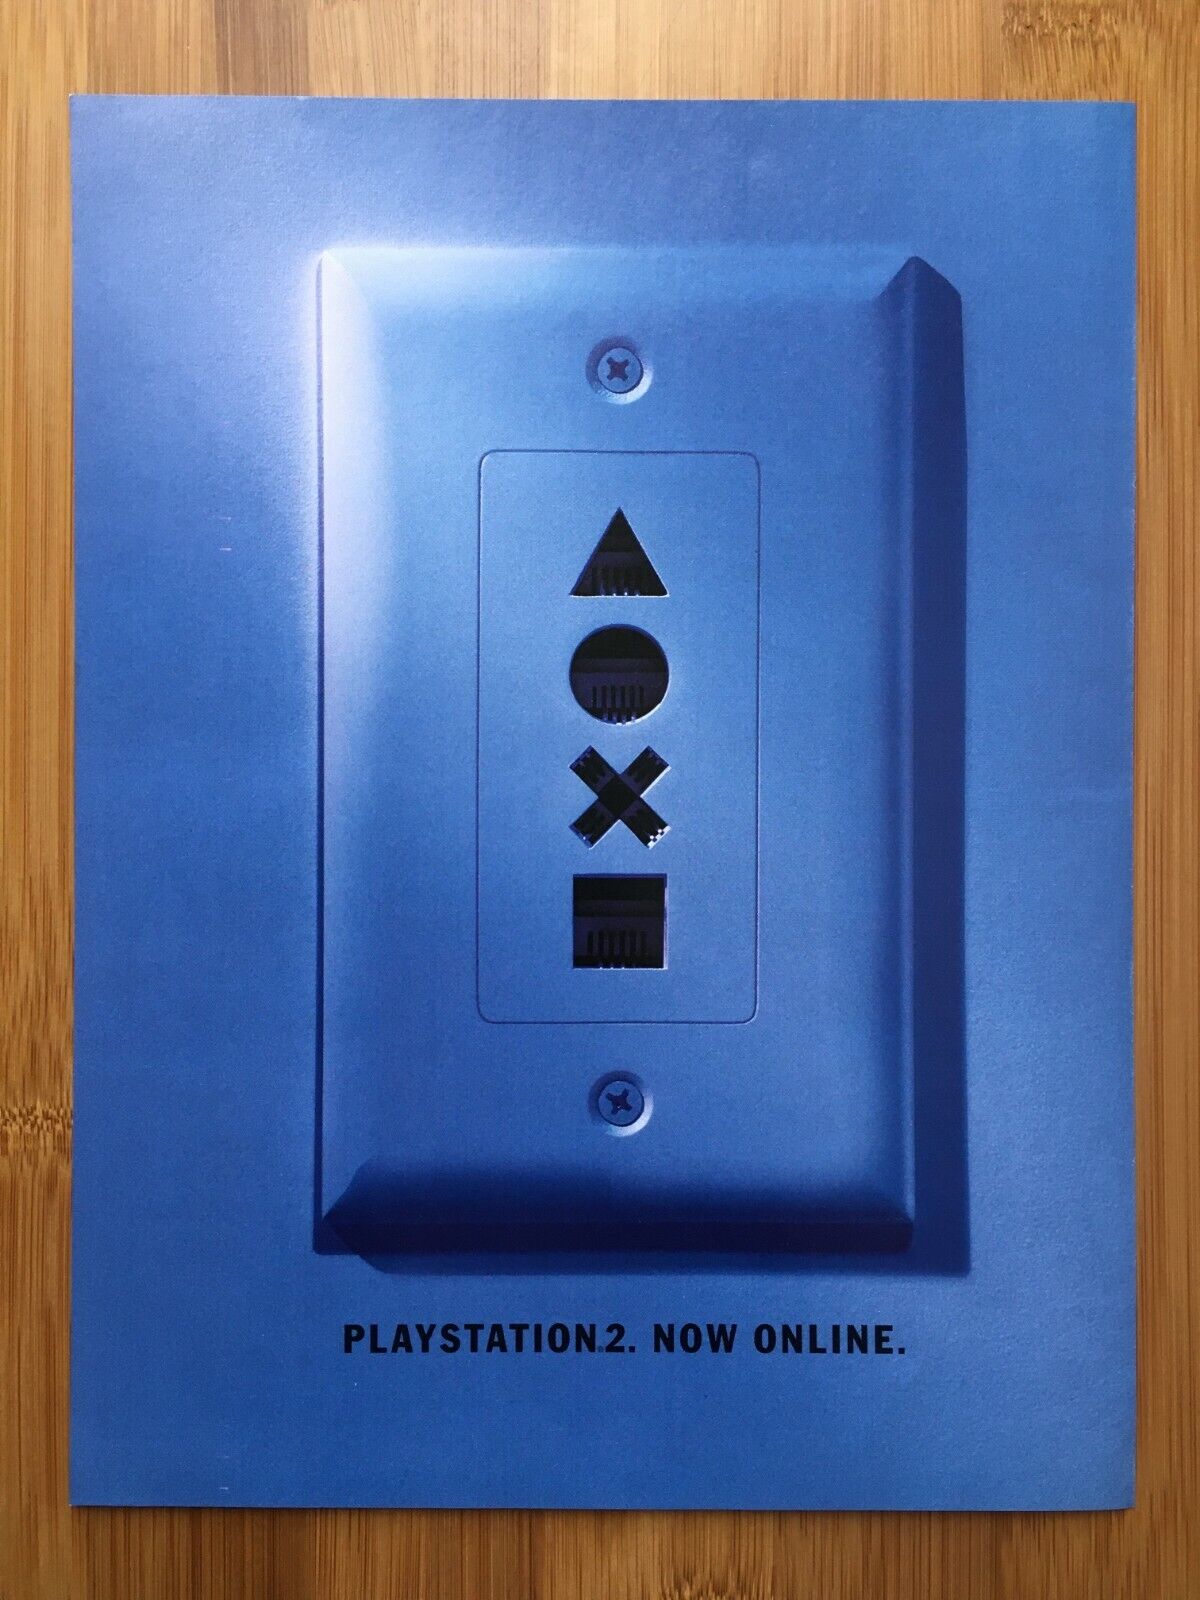 2002 Playstation 2 Online Vintage Print Ad/Poster Official PS2 System Promo Art